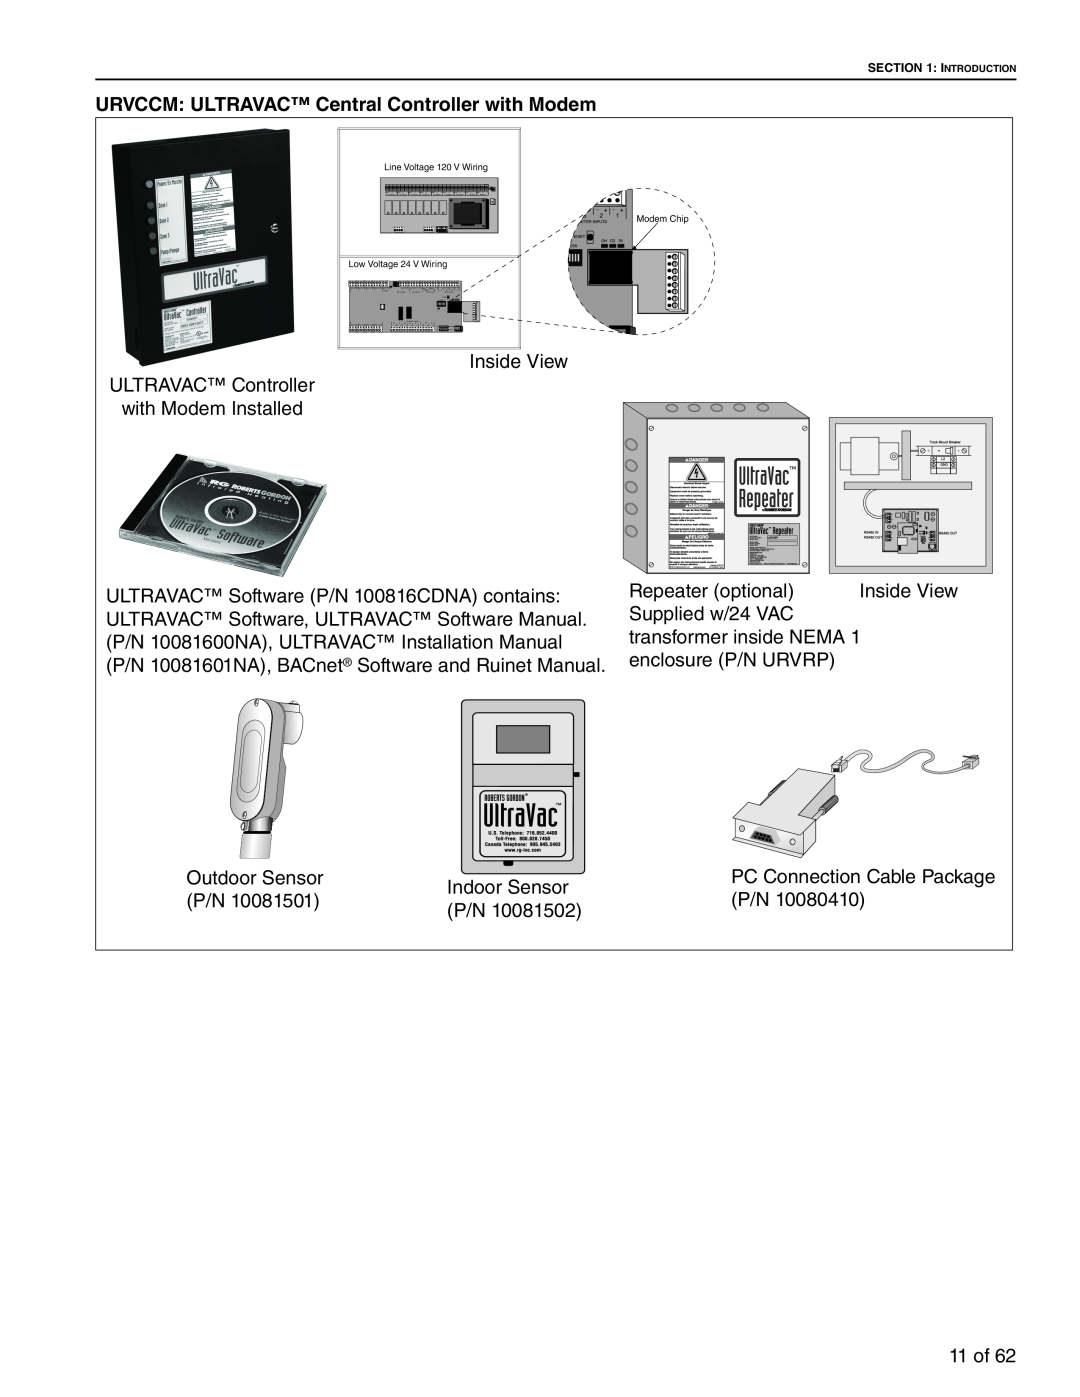 Roberts Gorden 10081601NA Rev H 12/11 service manual URVCCM: ULTRAVAC Central Controller with Modem 